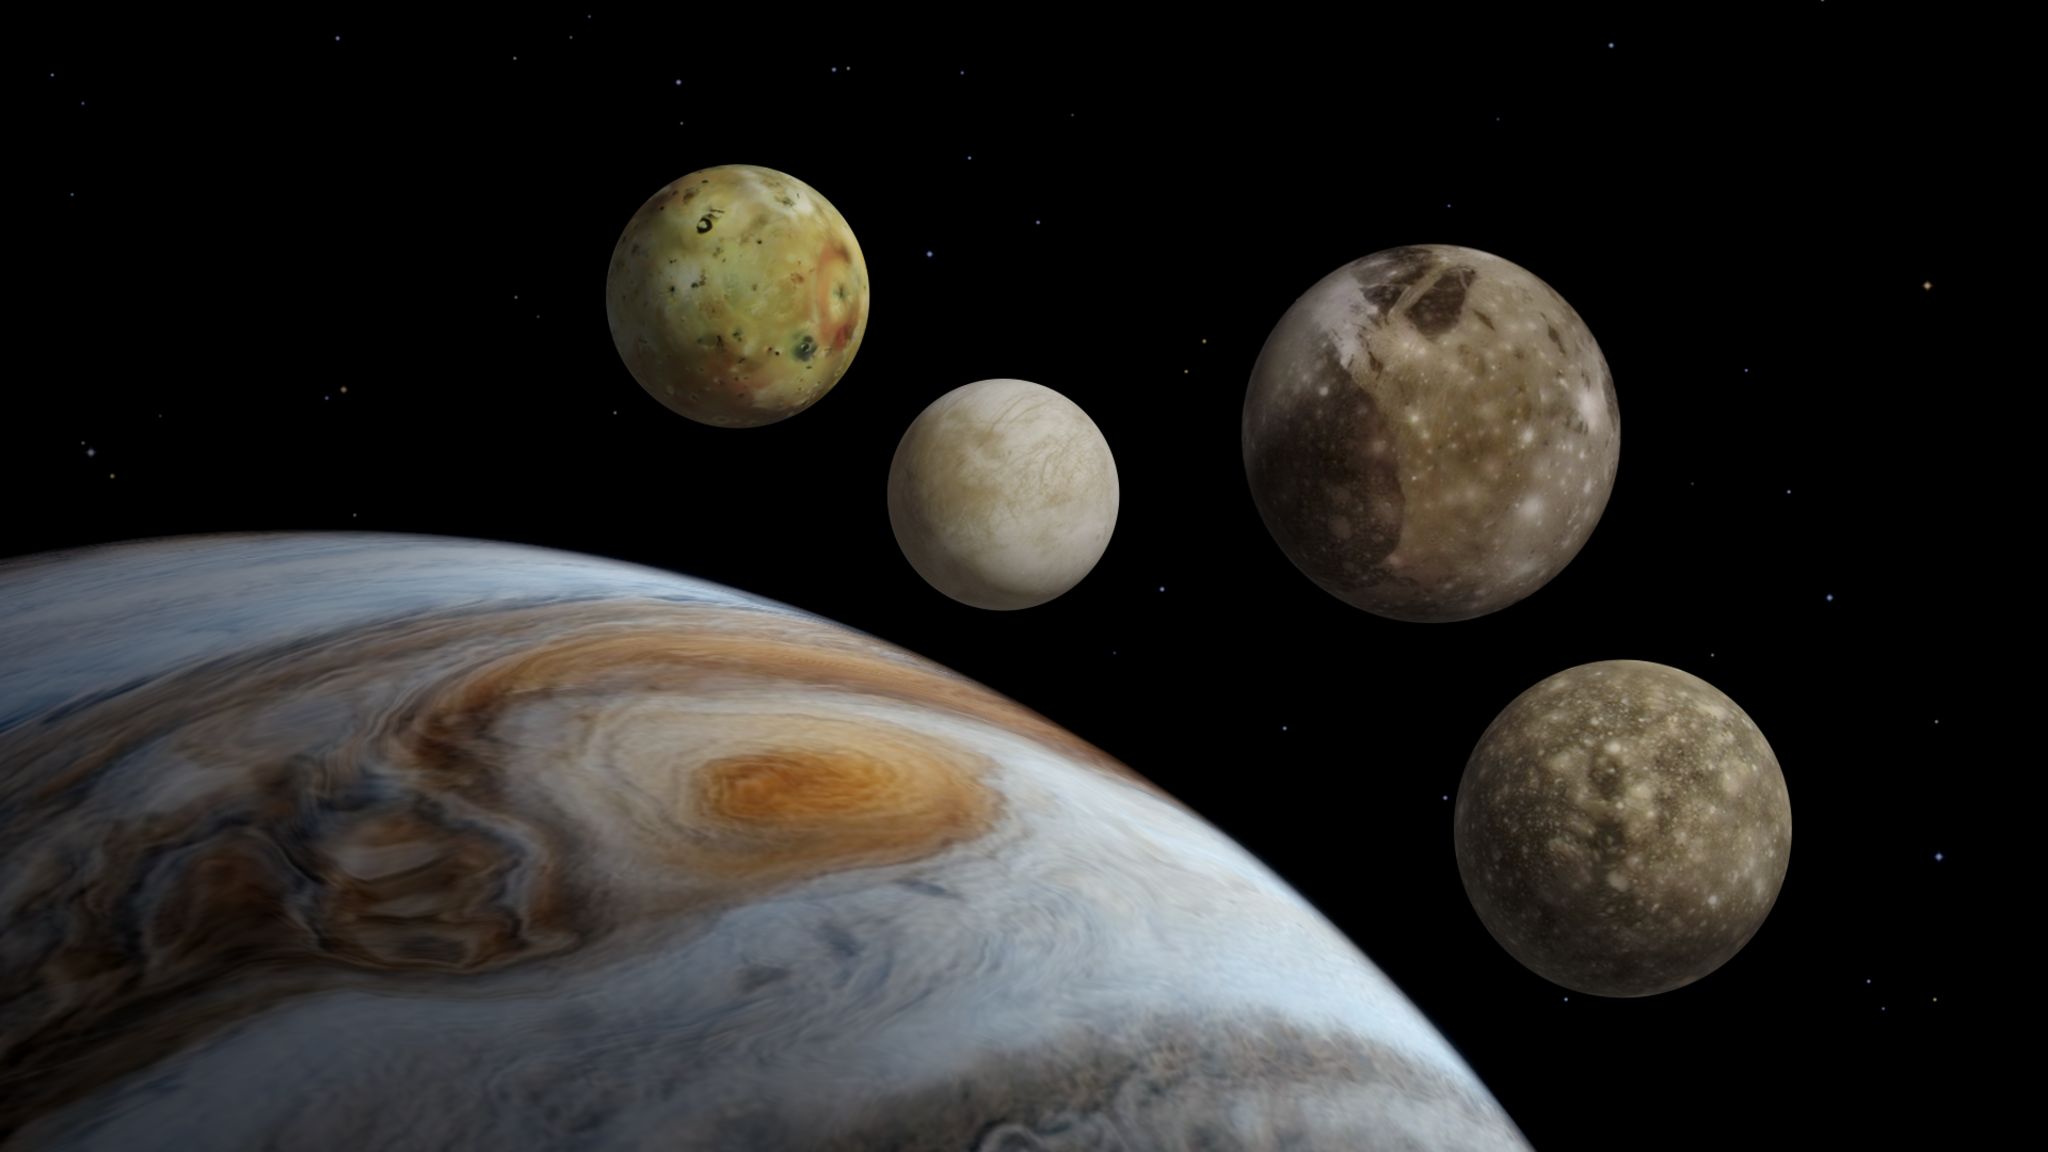 Луна в доме юпитера. Галилео Галилей спутники Юпитера. Галилеевы спутники Юпитера. Ганимед Спутник Юпитера. Планета спутники Юпитера Европа, Каллисто и Ганимед.